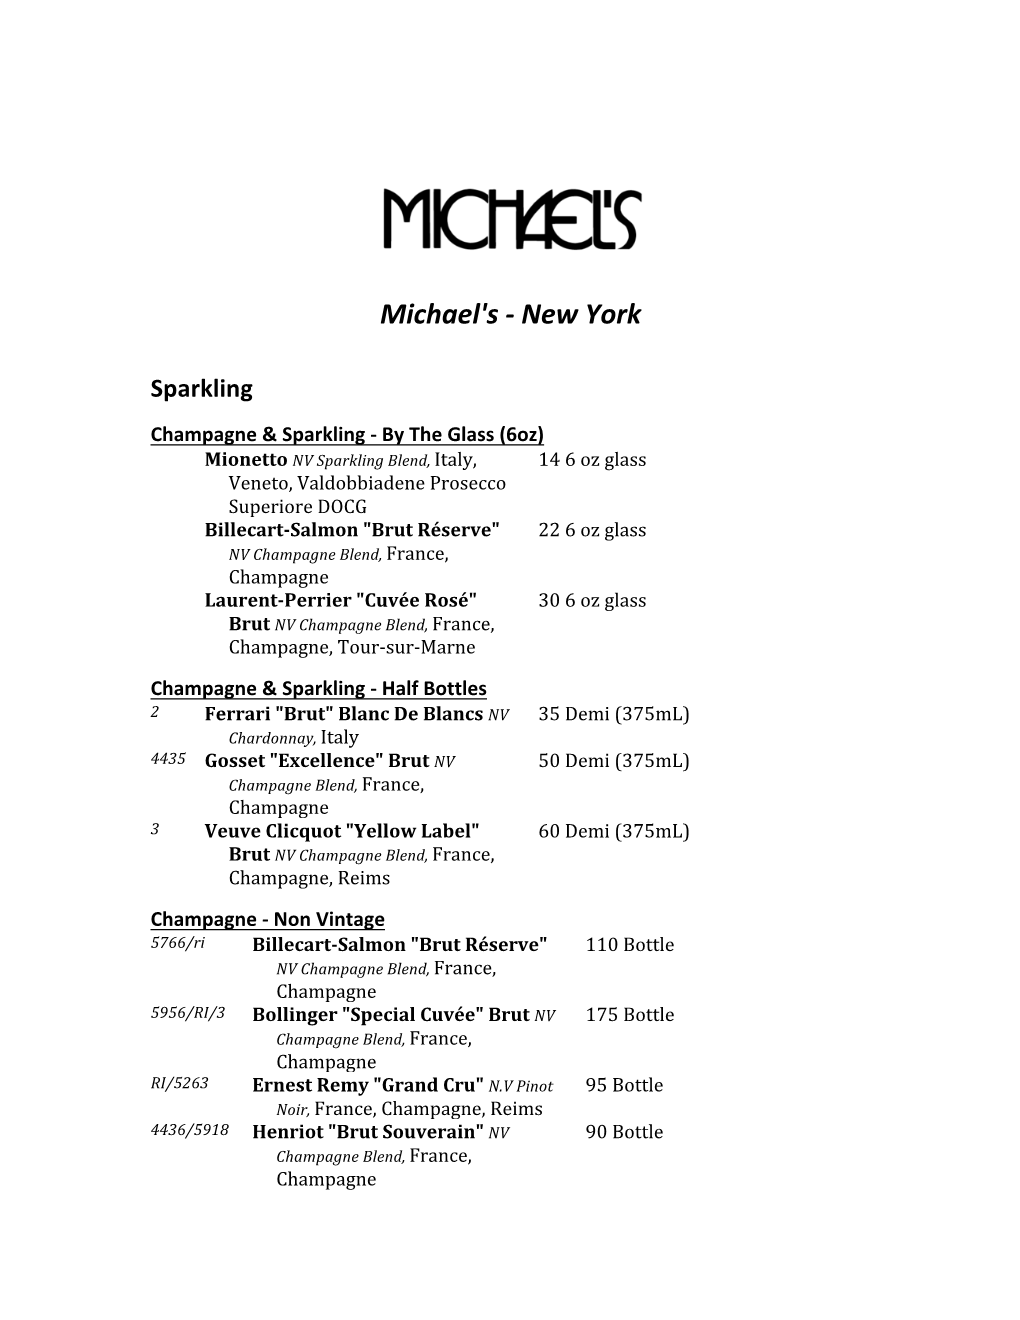 Michael's New York